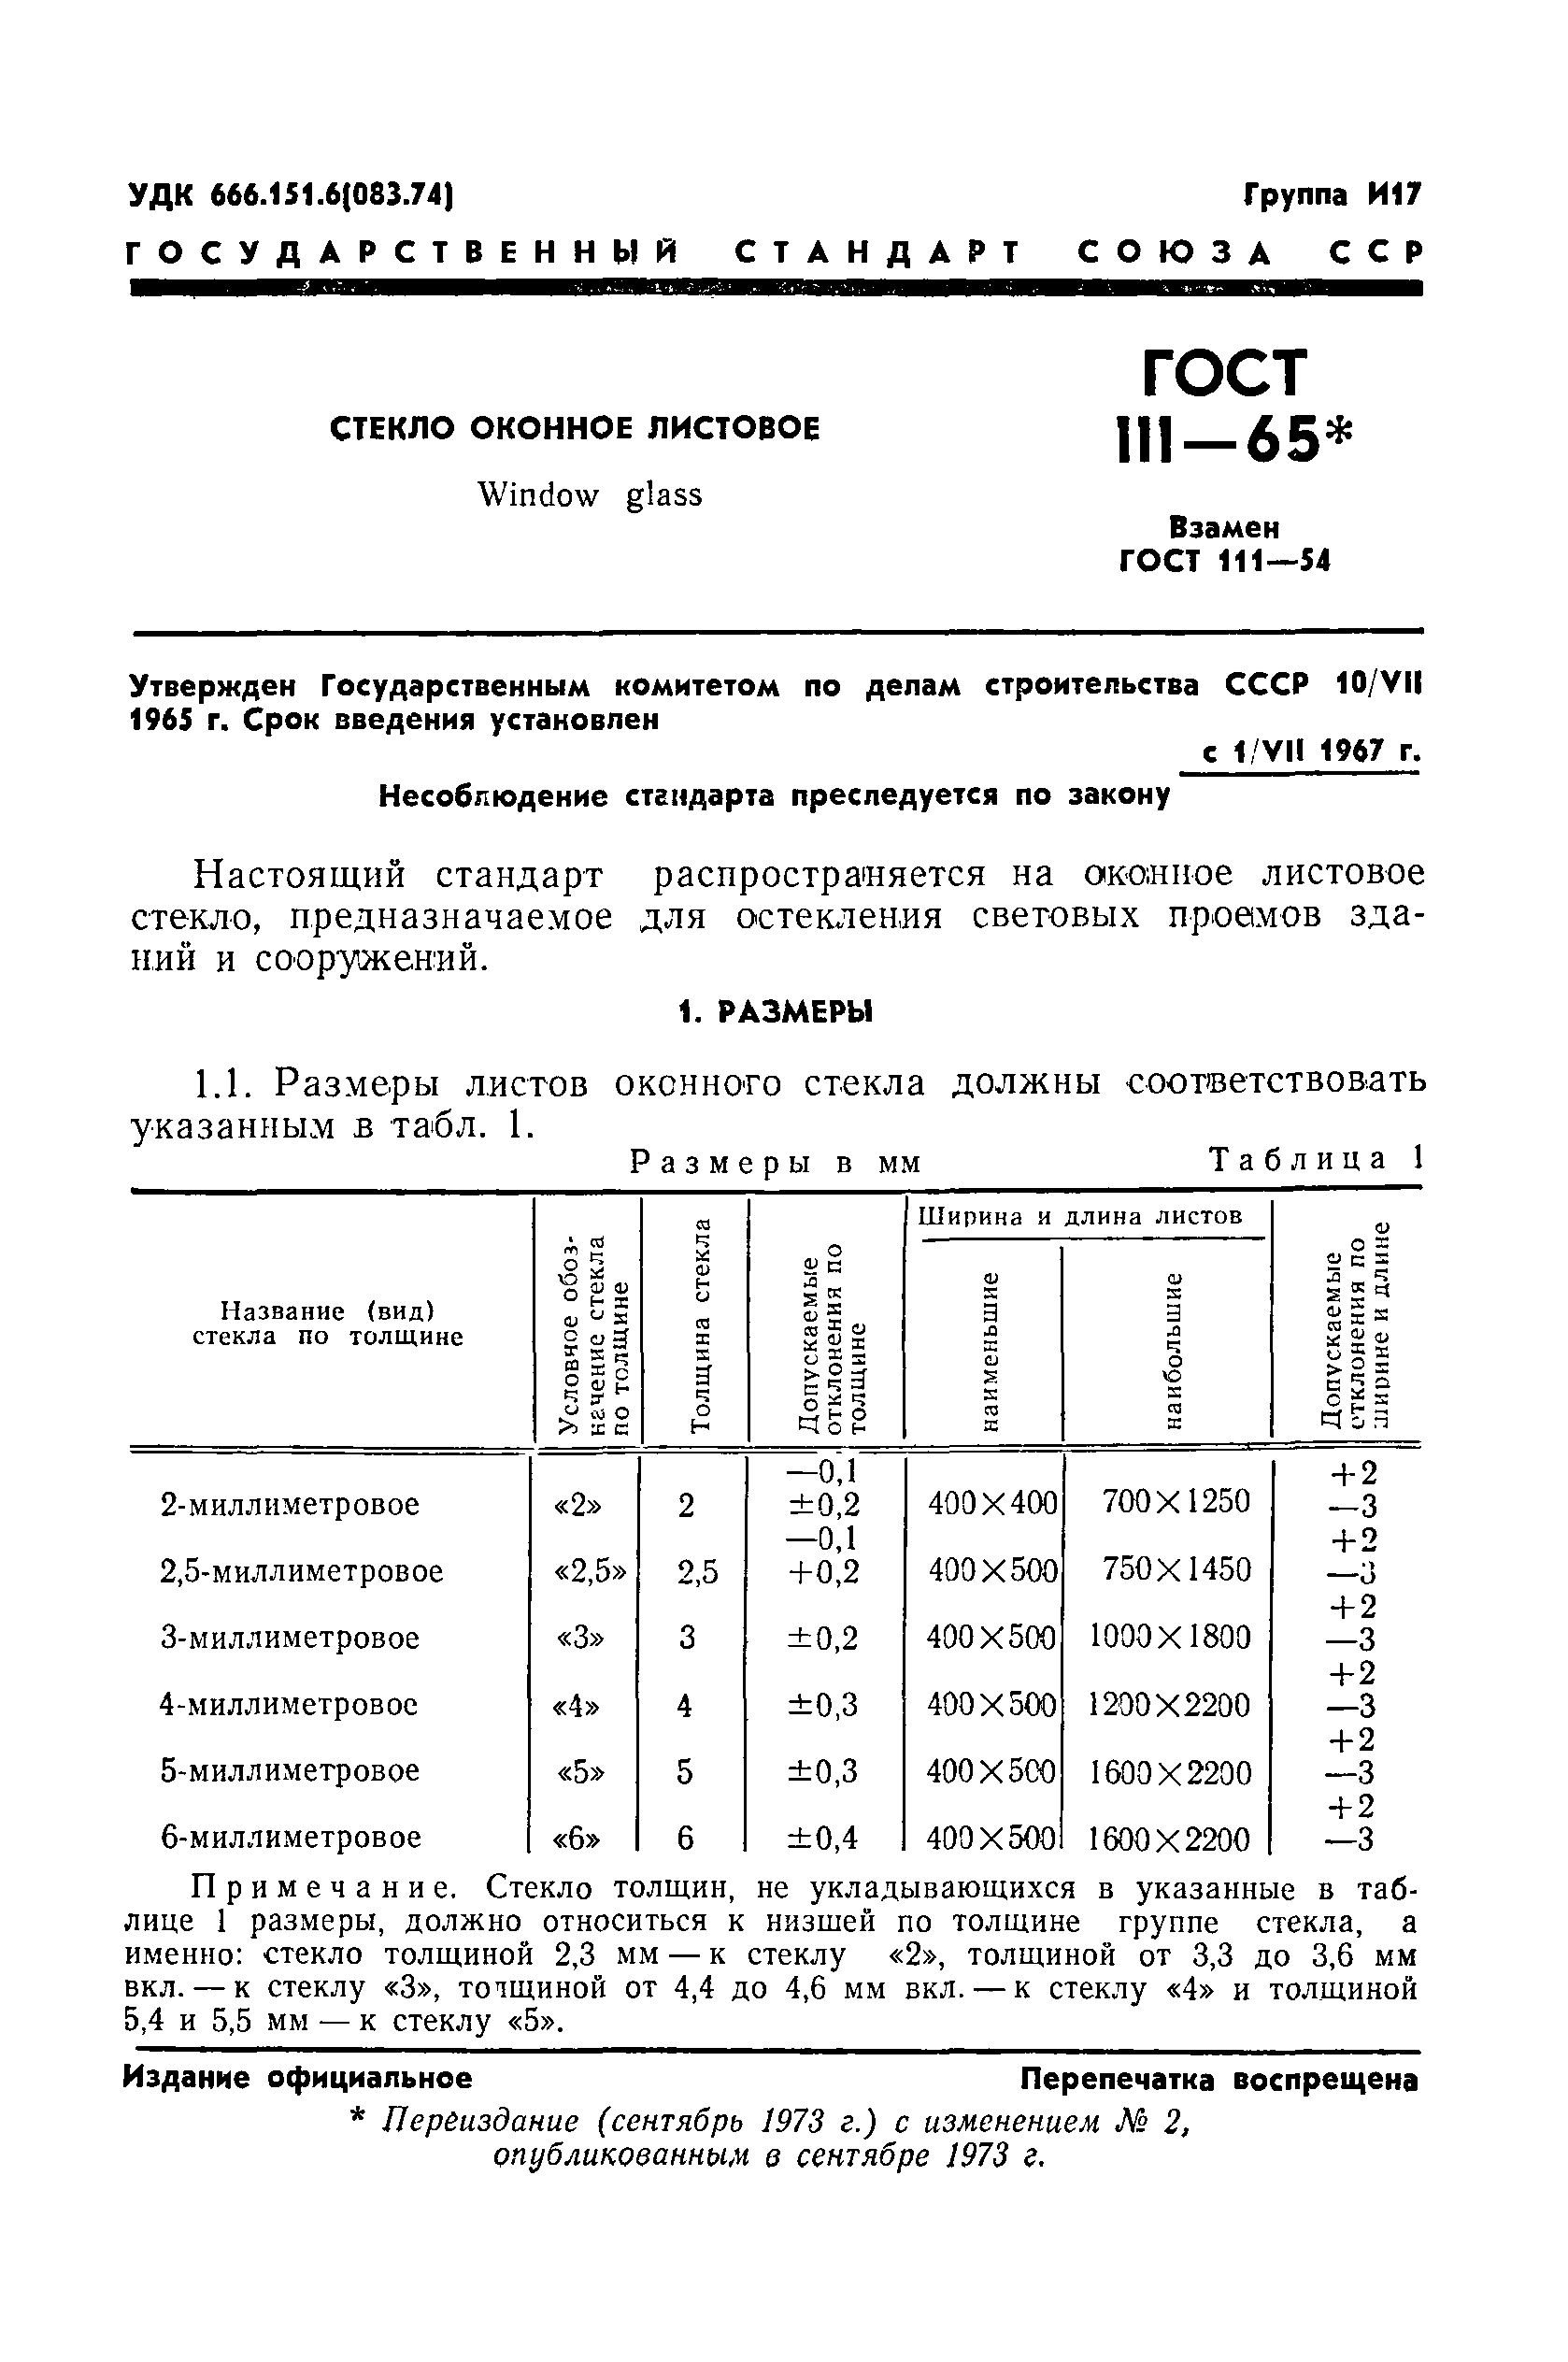 ГОСТ 111-65